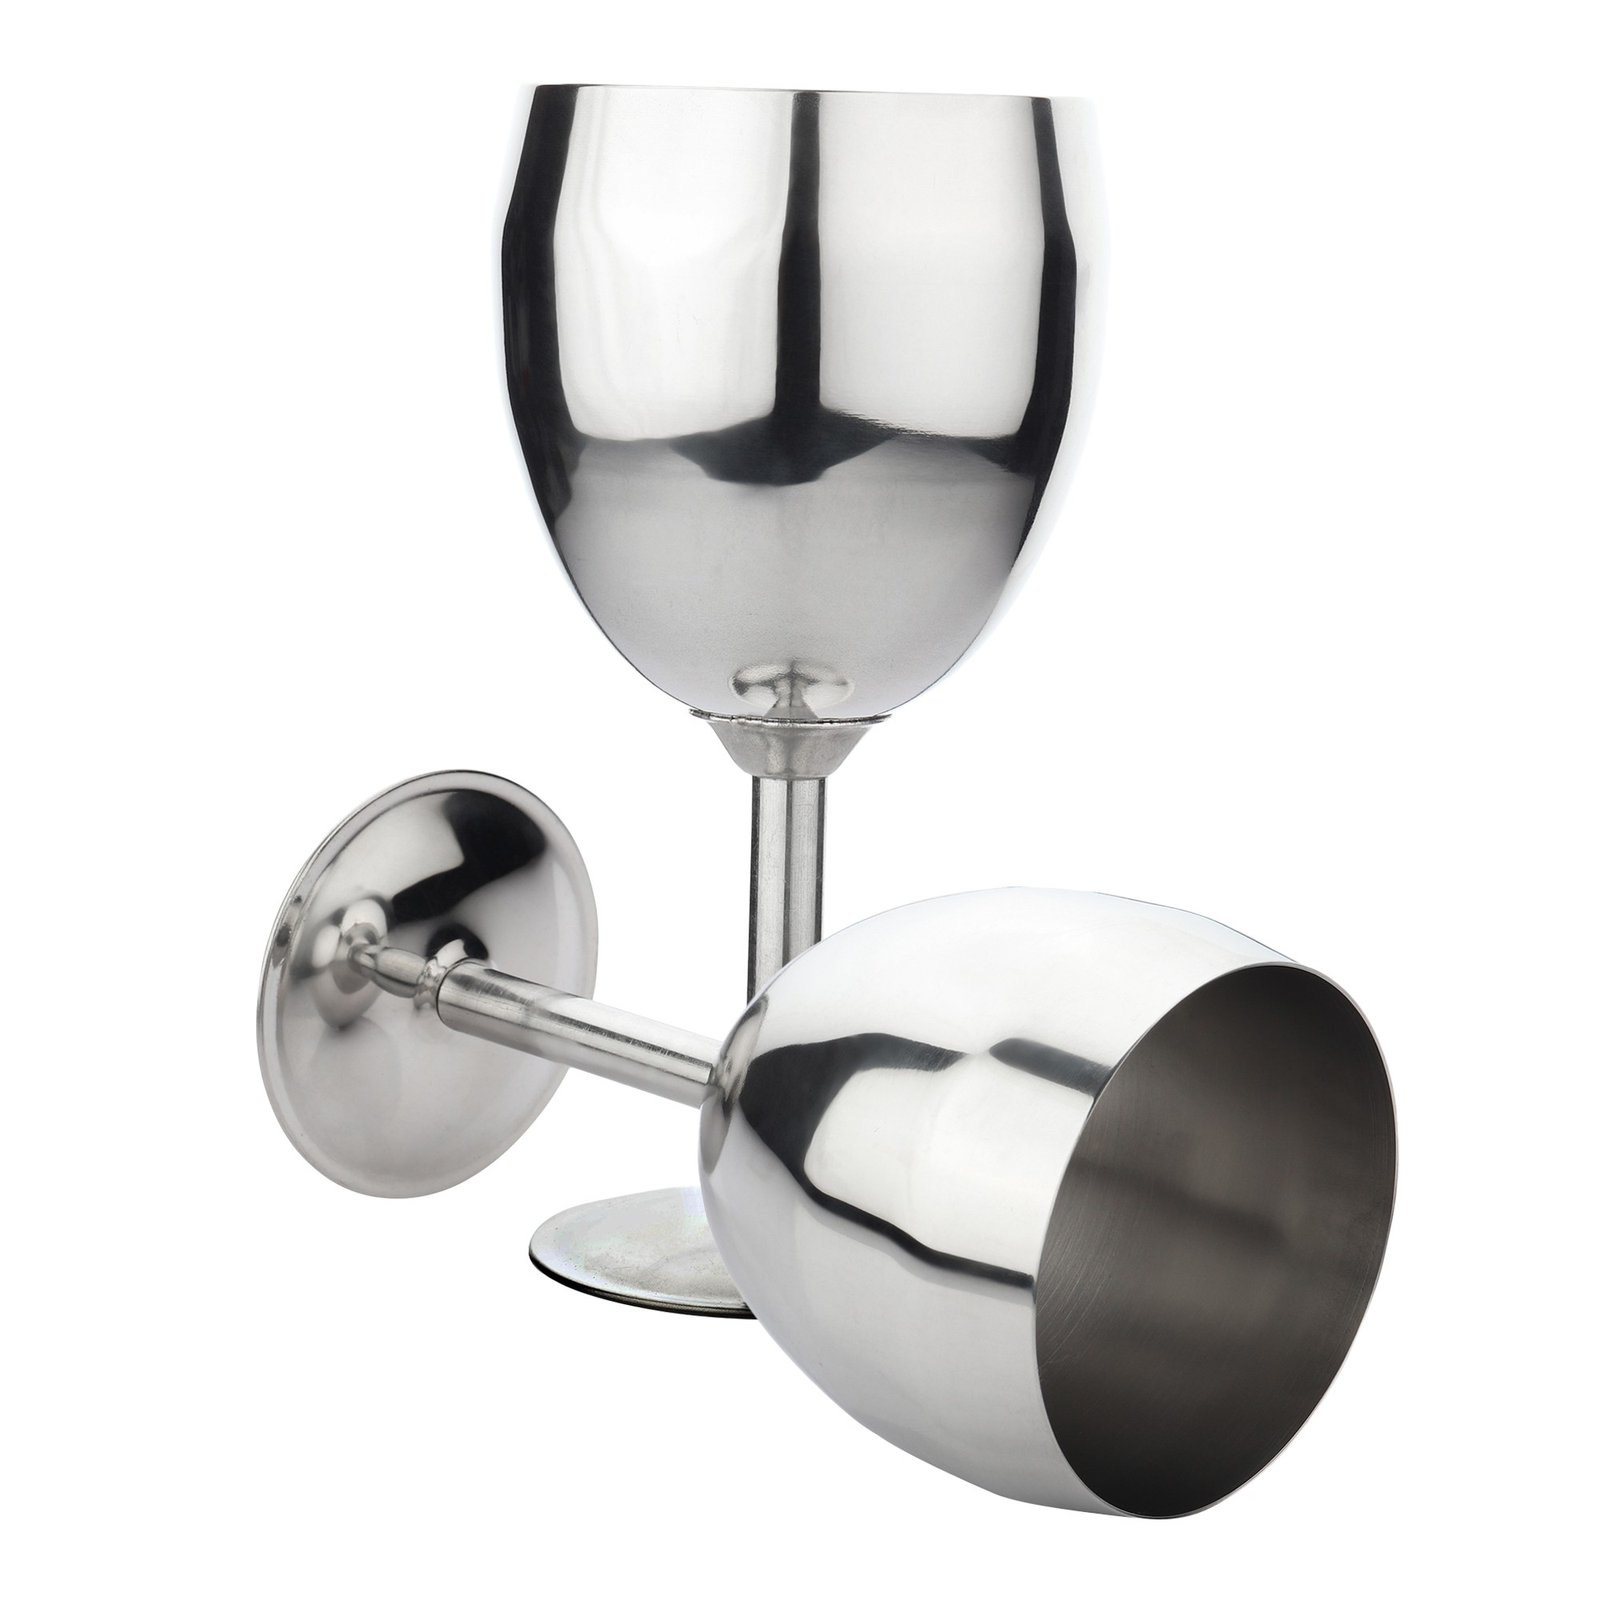 Stainless Steel Wine Goblet Galsses